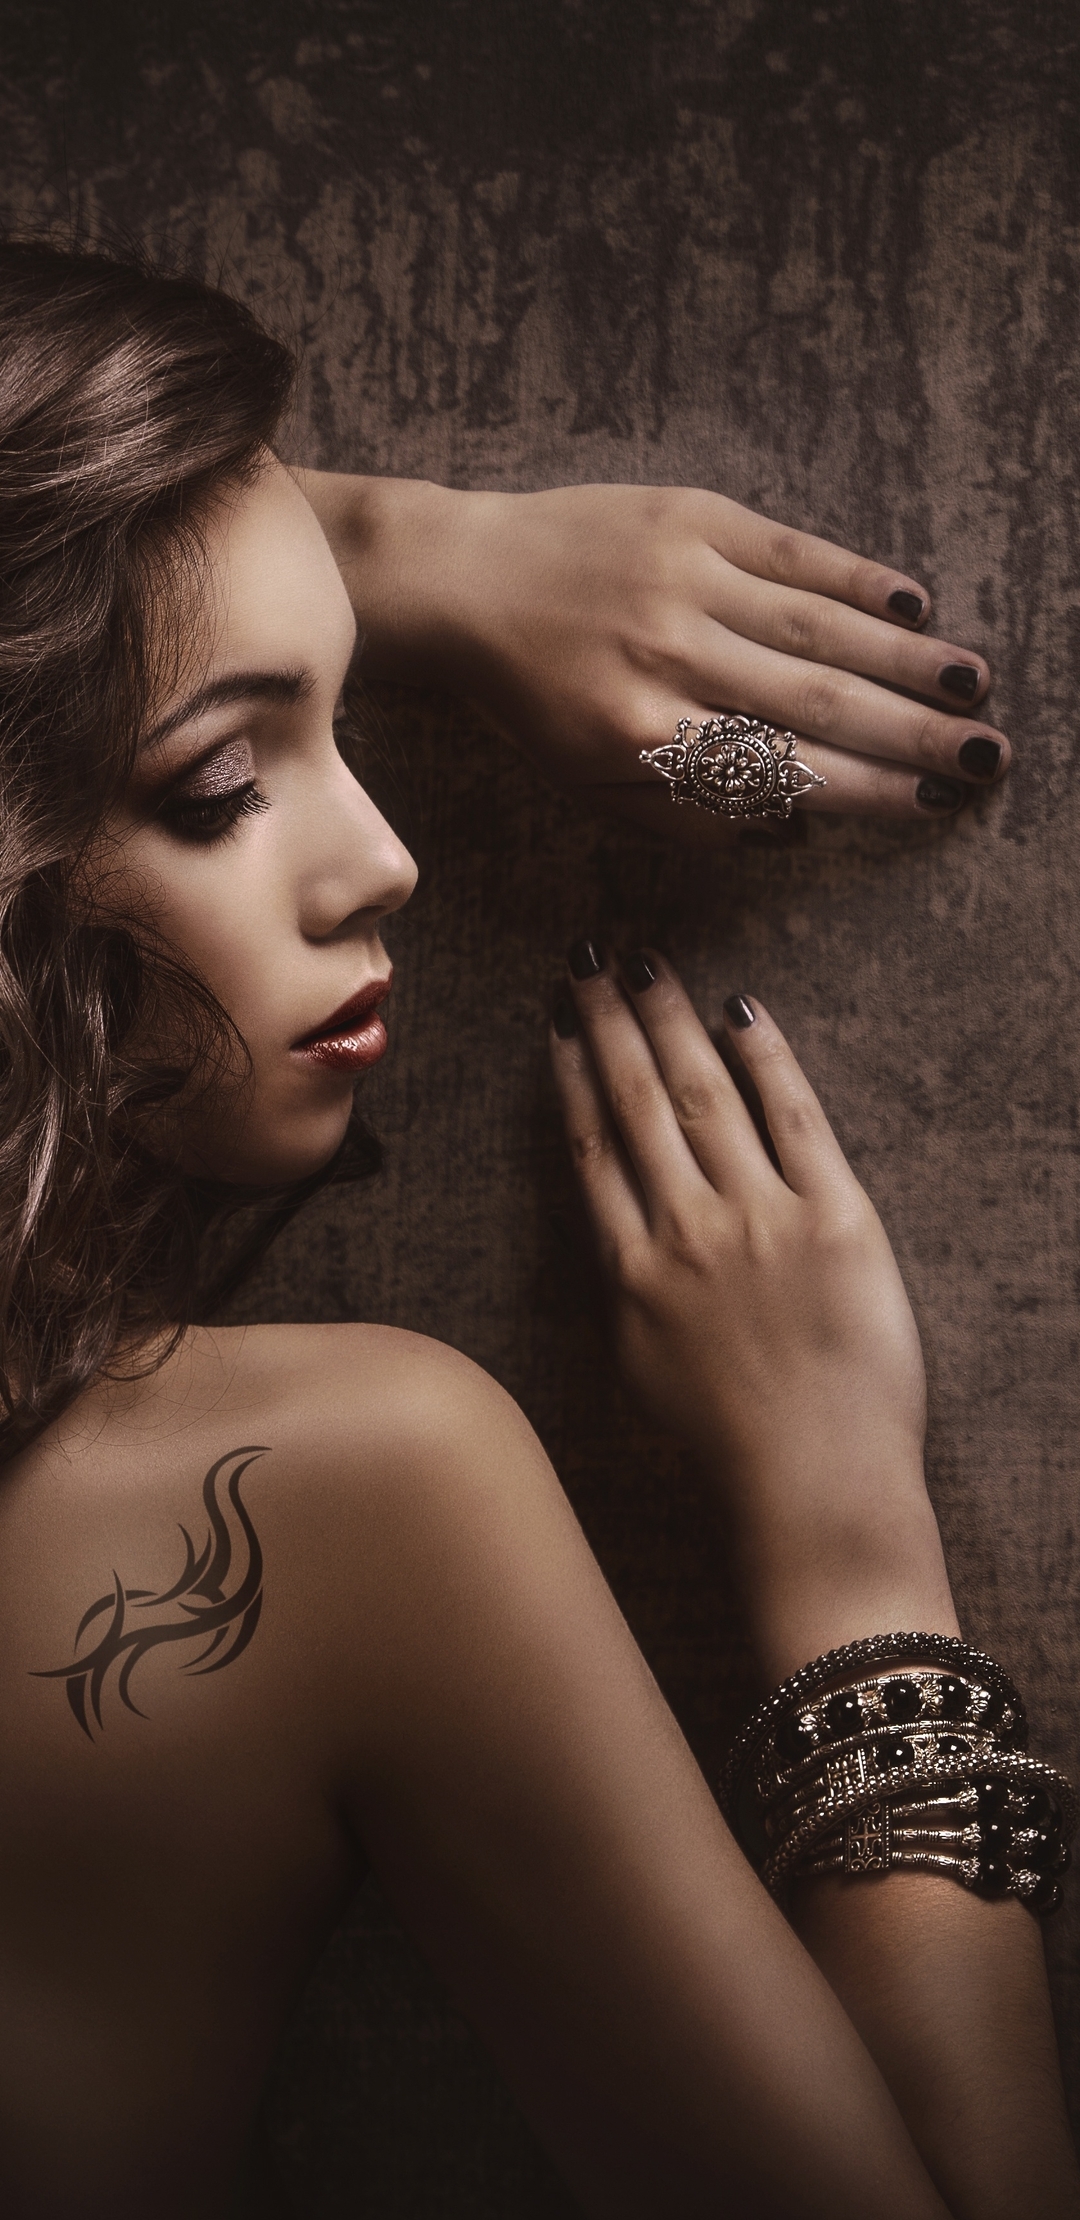 Image: Girl, profile, hair, curls, back, tattoo, bracelets